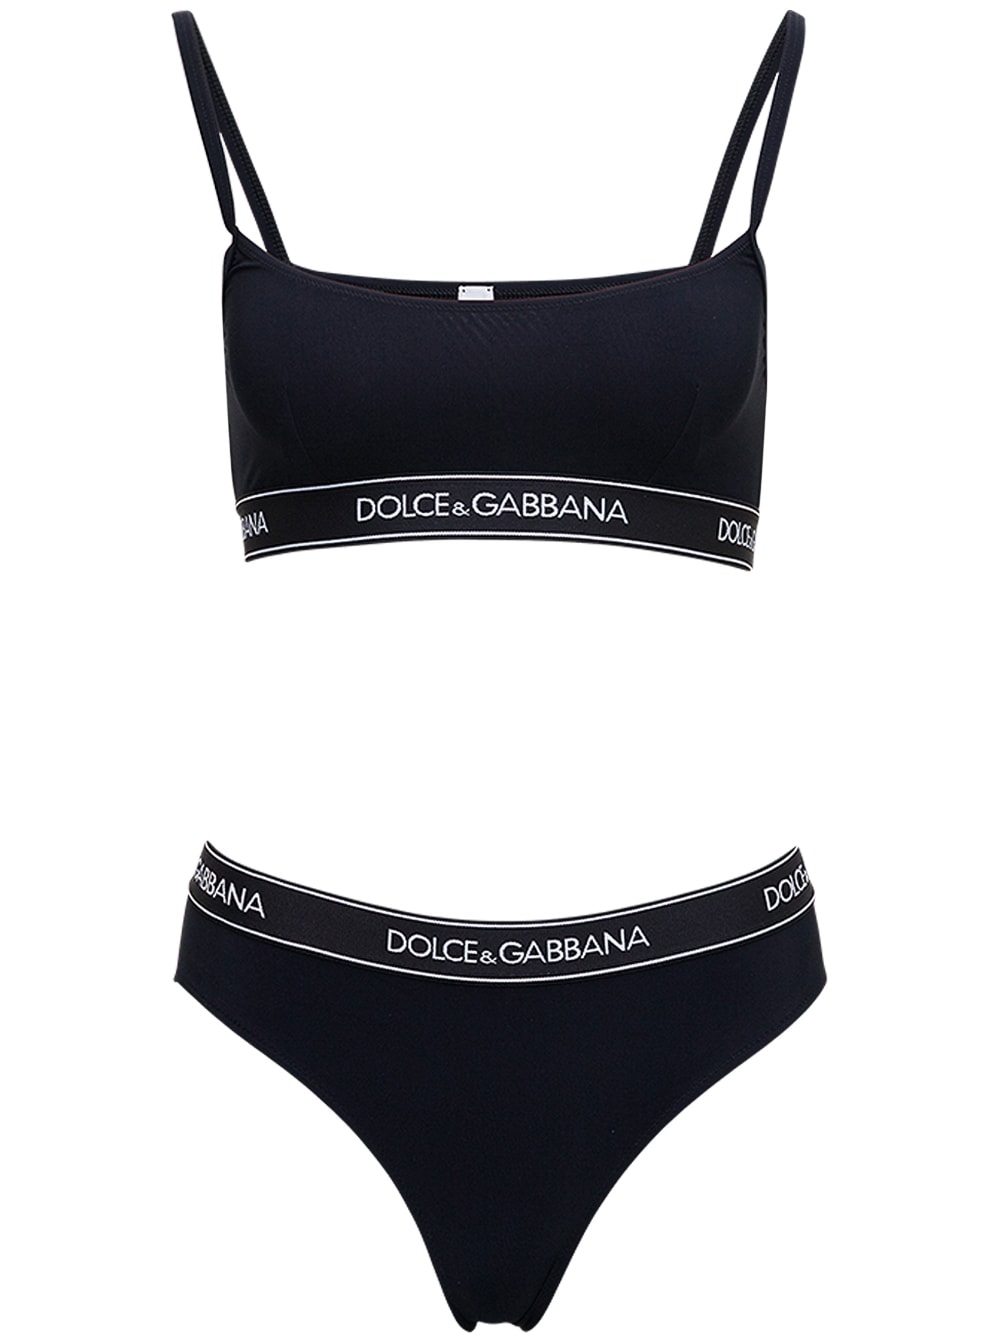 Dolce & Gabbana Black Bikini With Logoed Elastic Band